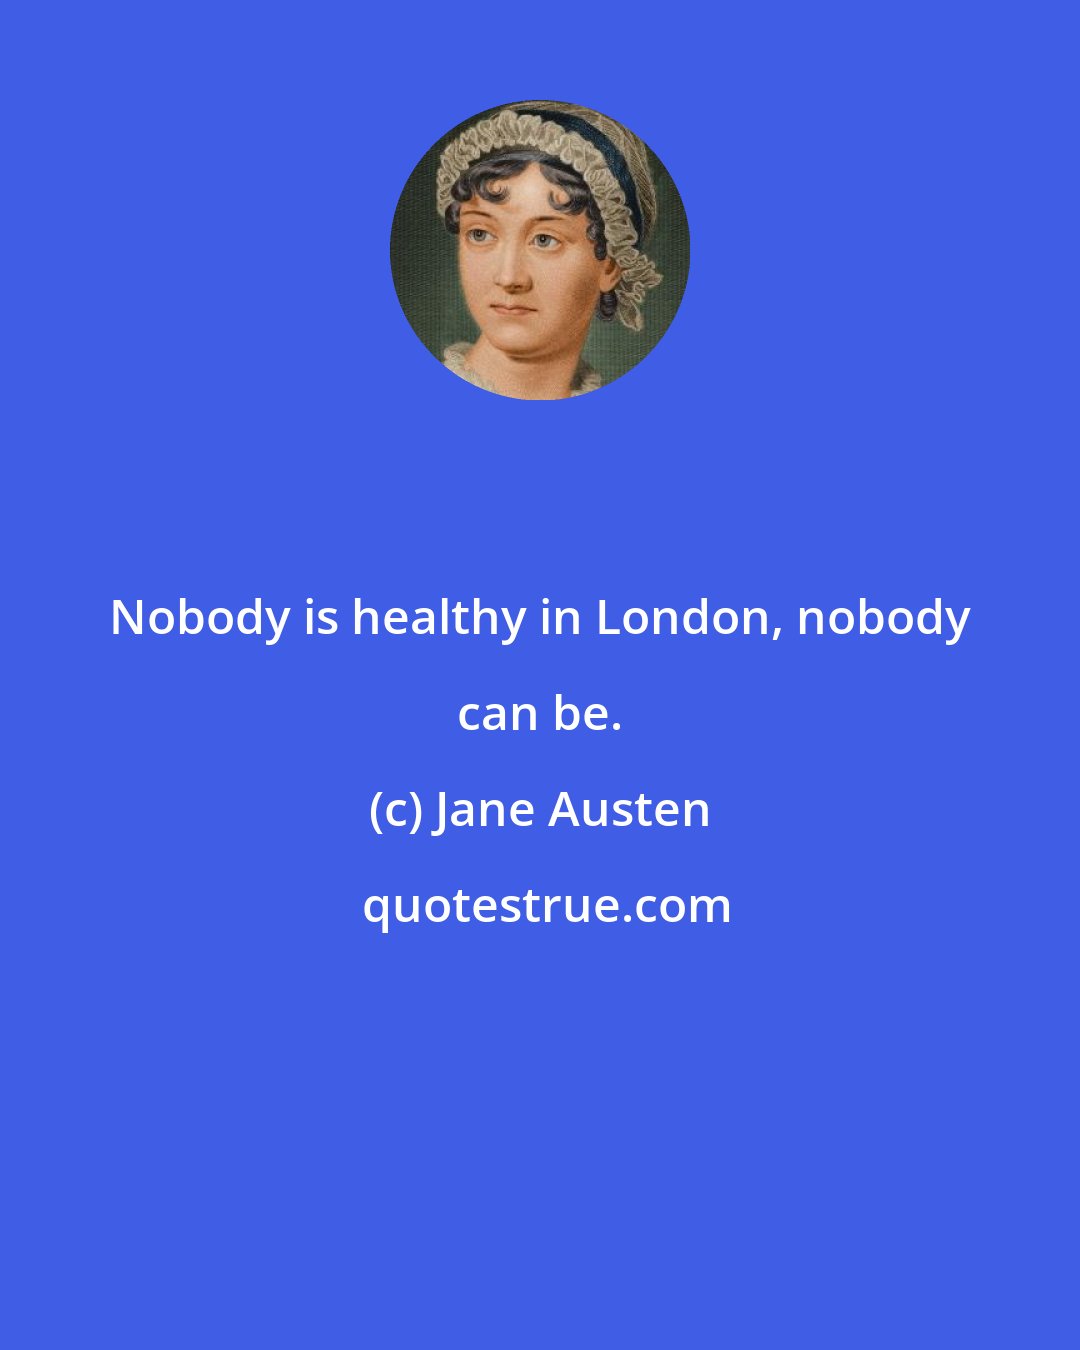 Jane Austen: Nobody is healthy in London, nobody can be.